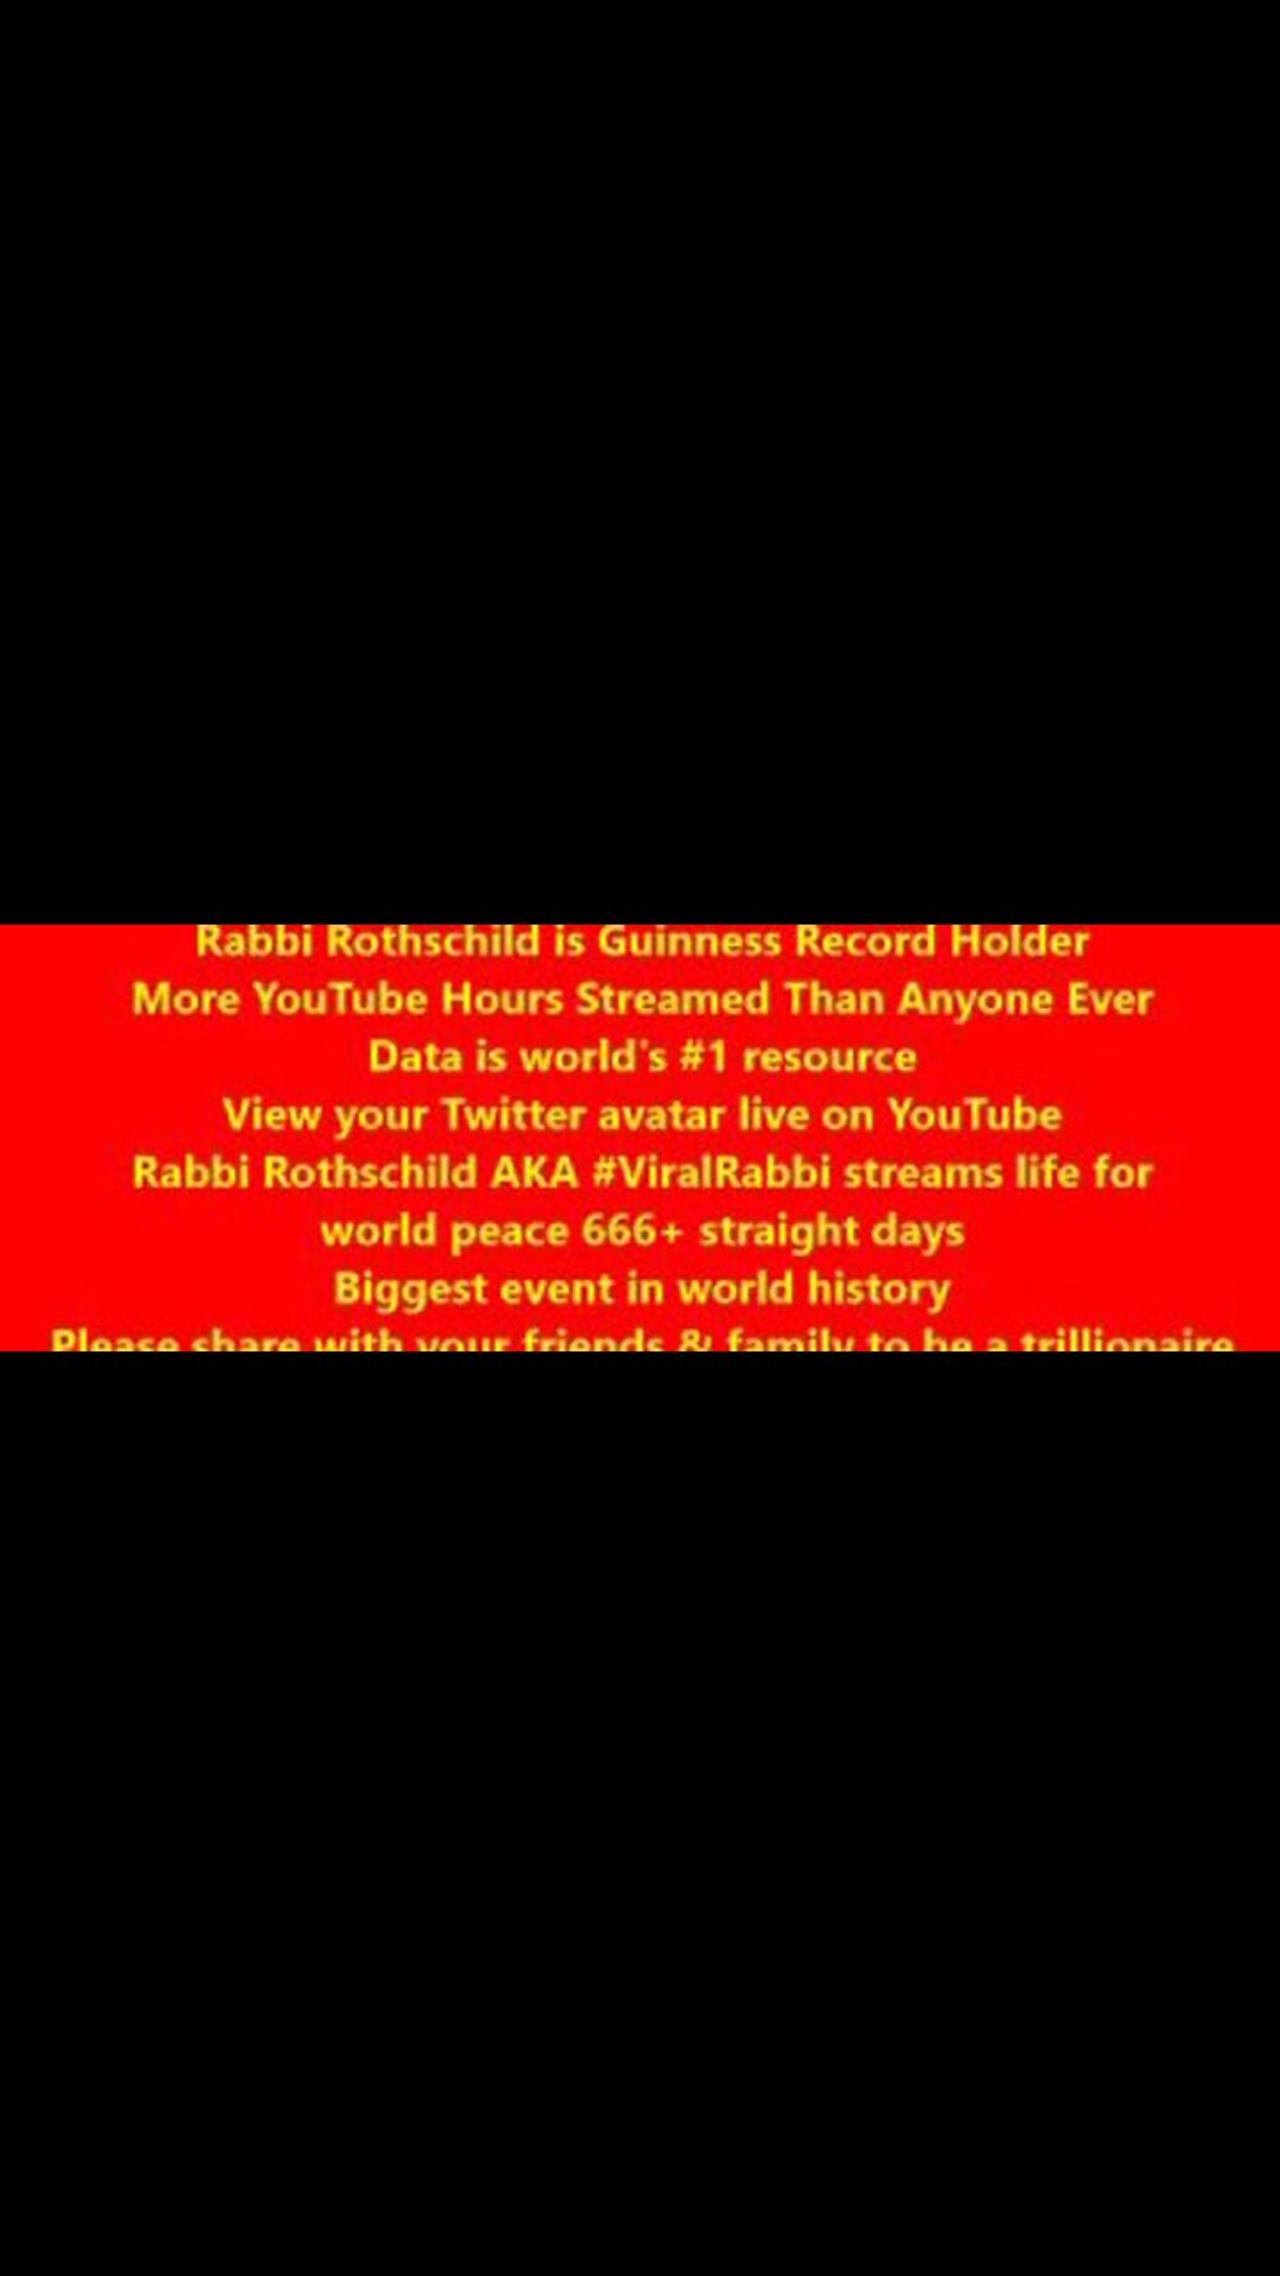 #Rabbi #Rothschild #ViralRabbi #IRL 24/7/365 #YouTube #Music #News #Live #Chat #TikTok #Media #Viral